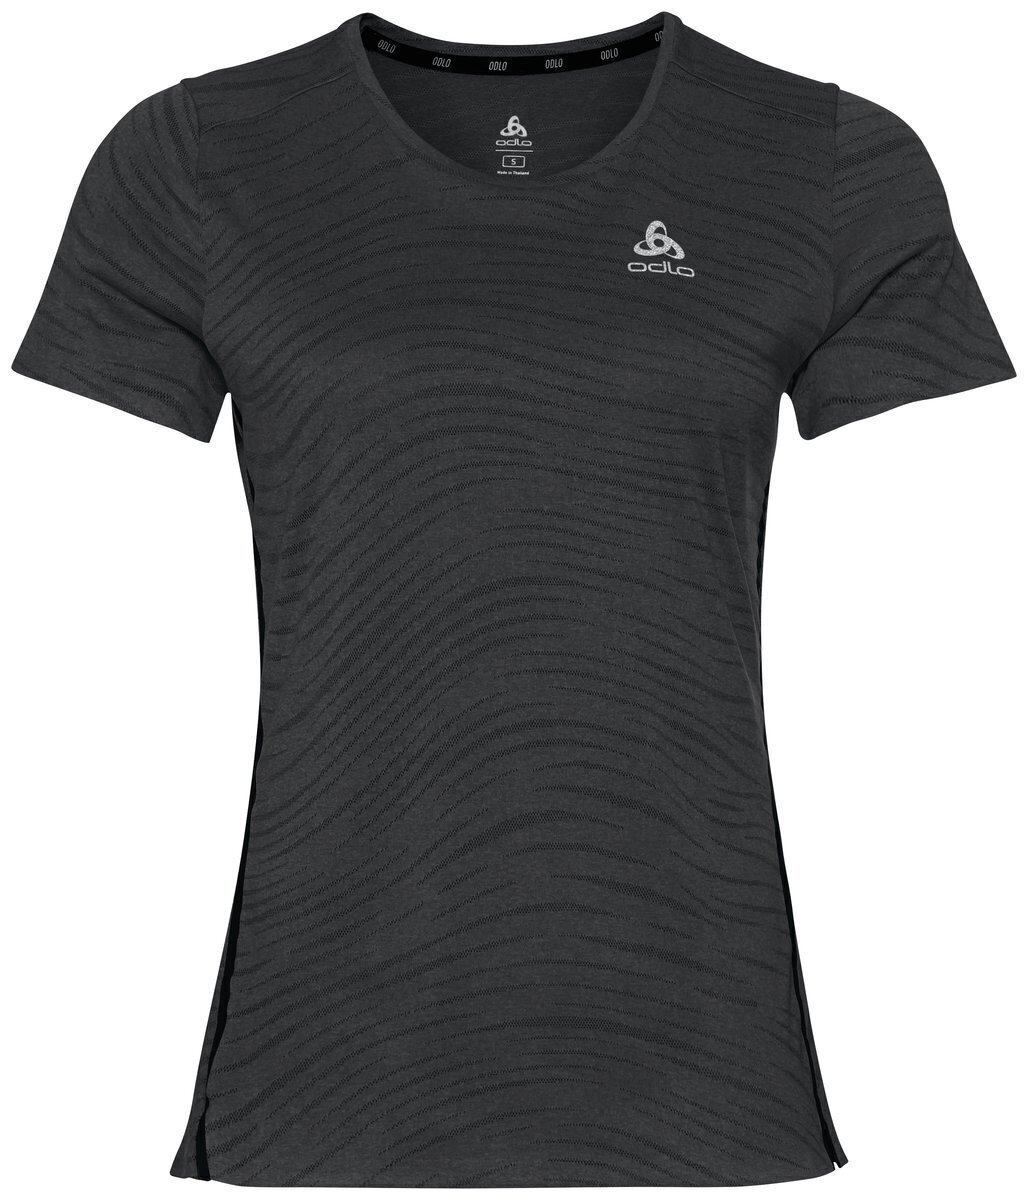 Running t-shirt with short sleeves
 Odlo Zeroweight Engineered Chill-Tec T-Shirt Black Melange XS Running t-shirt with short sleeves